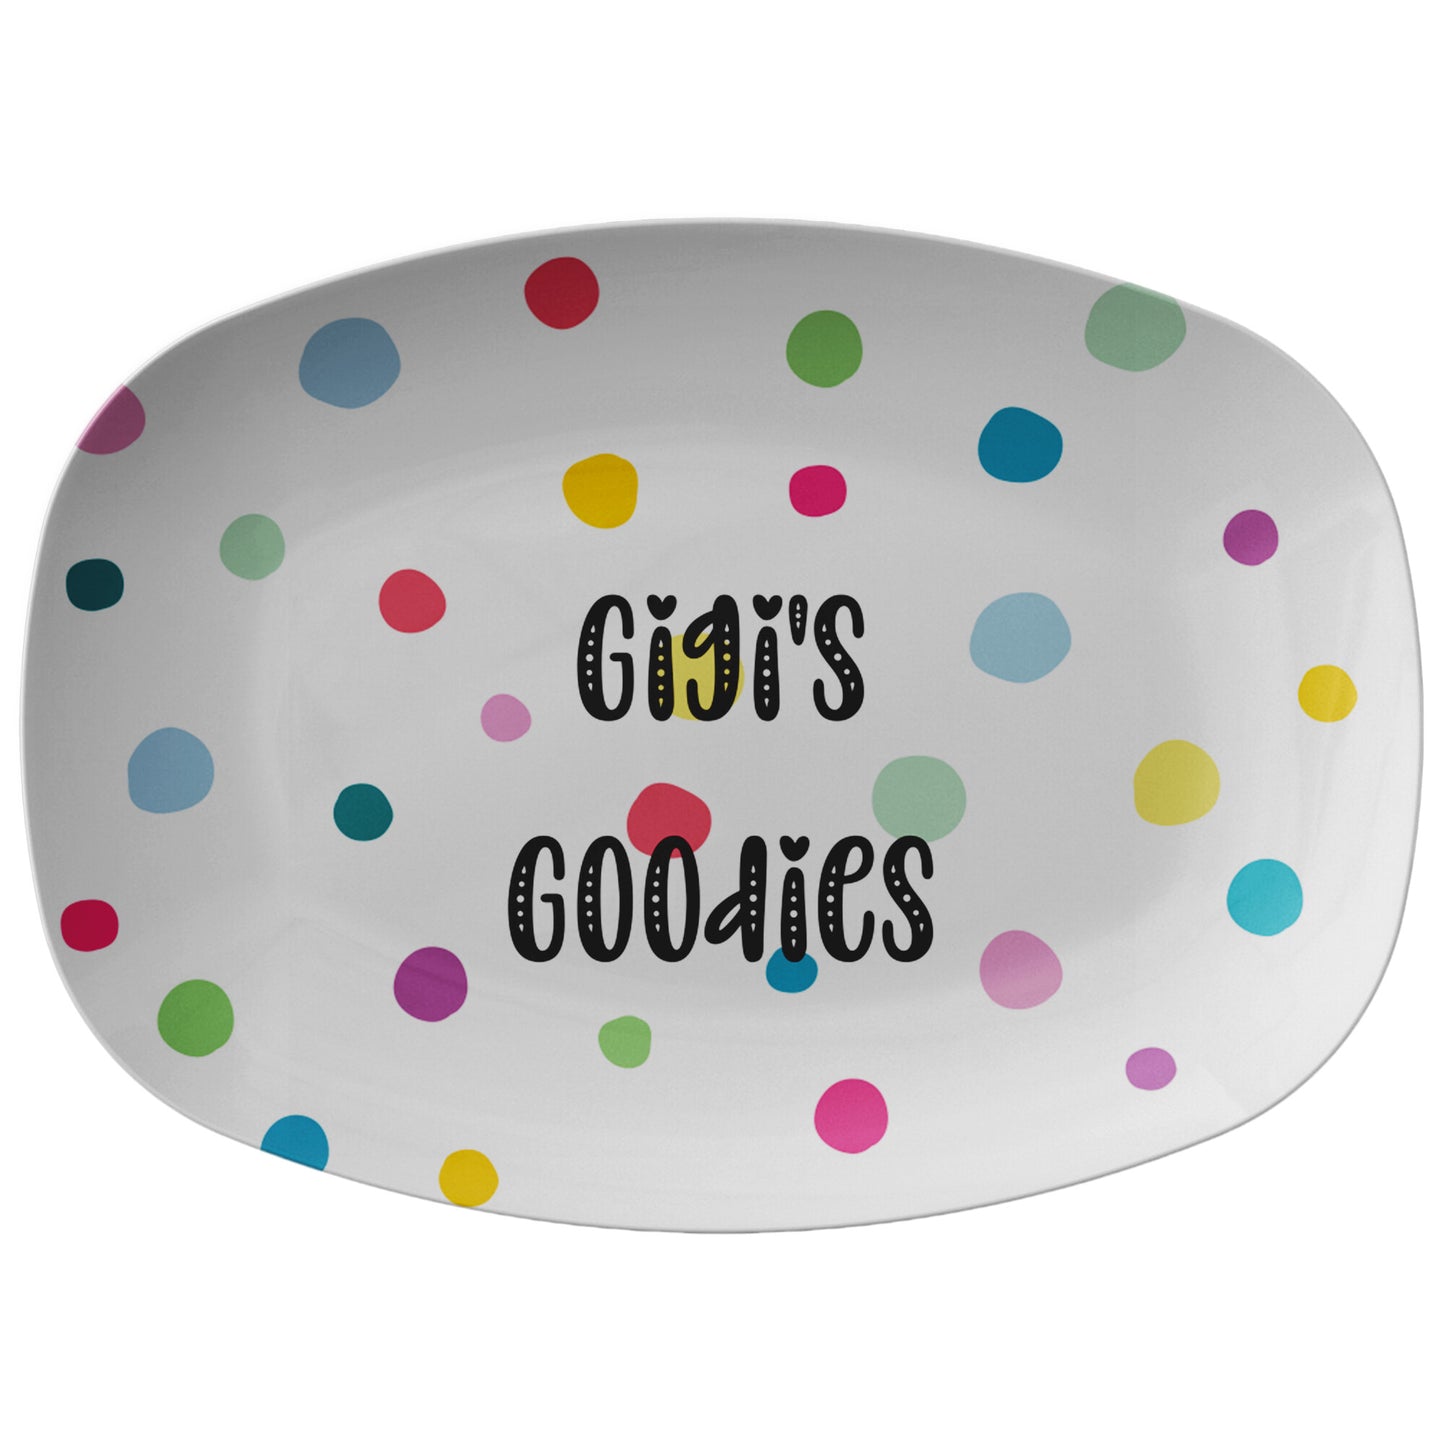 Gigi's Goodies Serving Platter